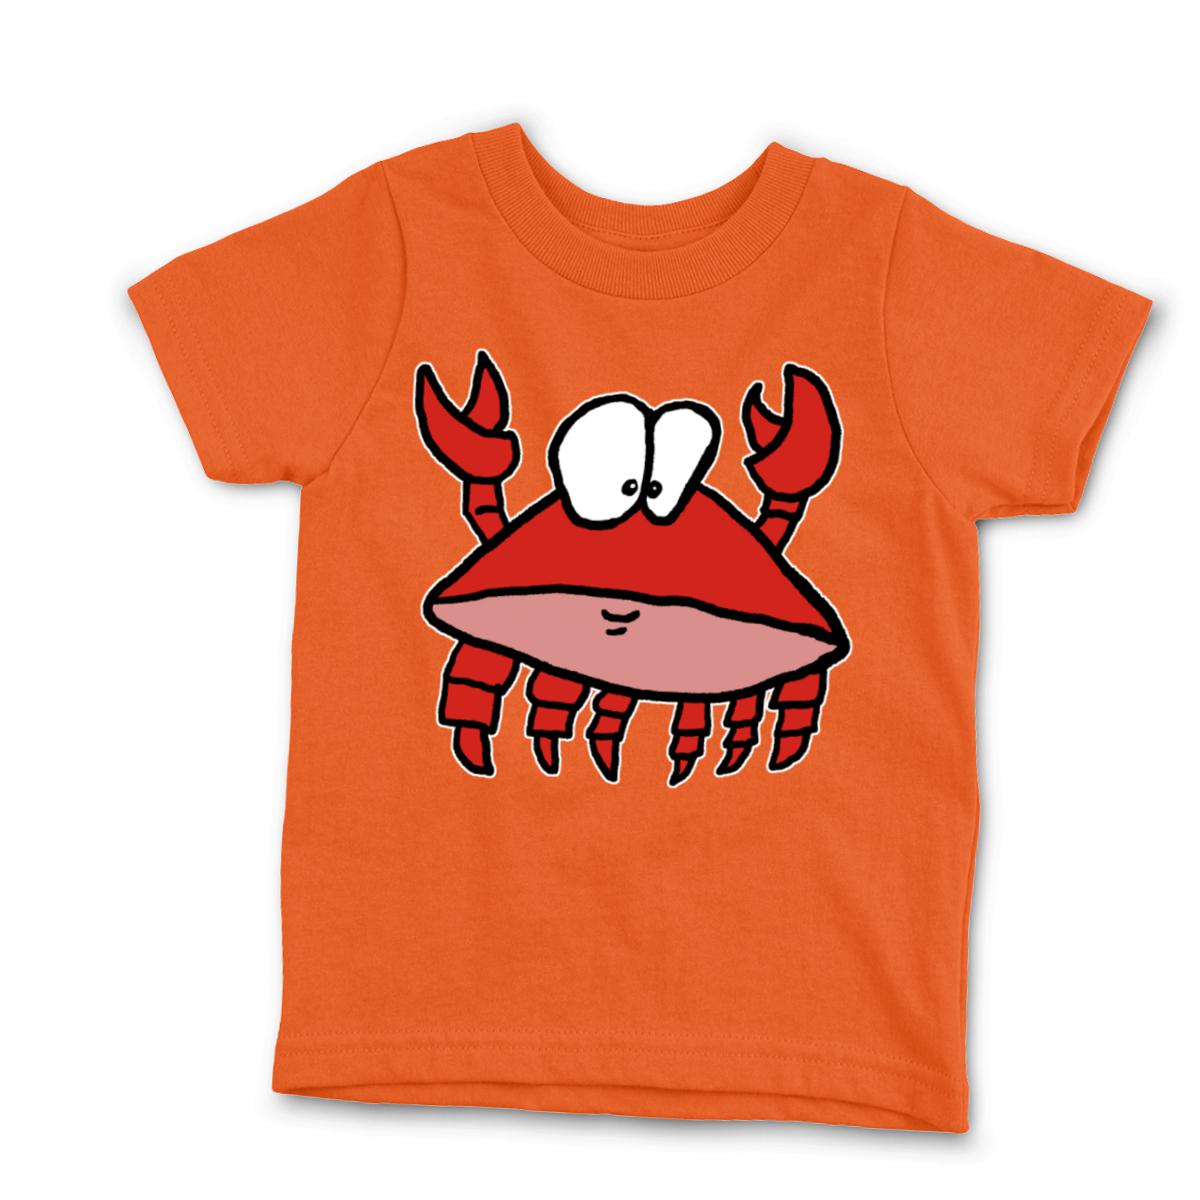 Crab 2.0 Kid's Tee Small orange